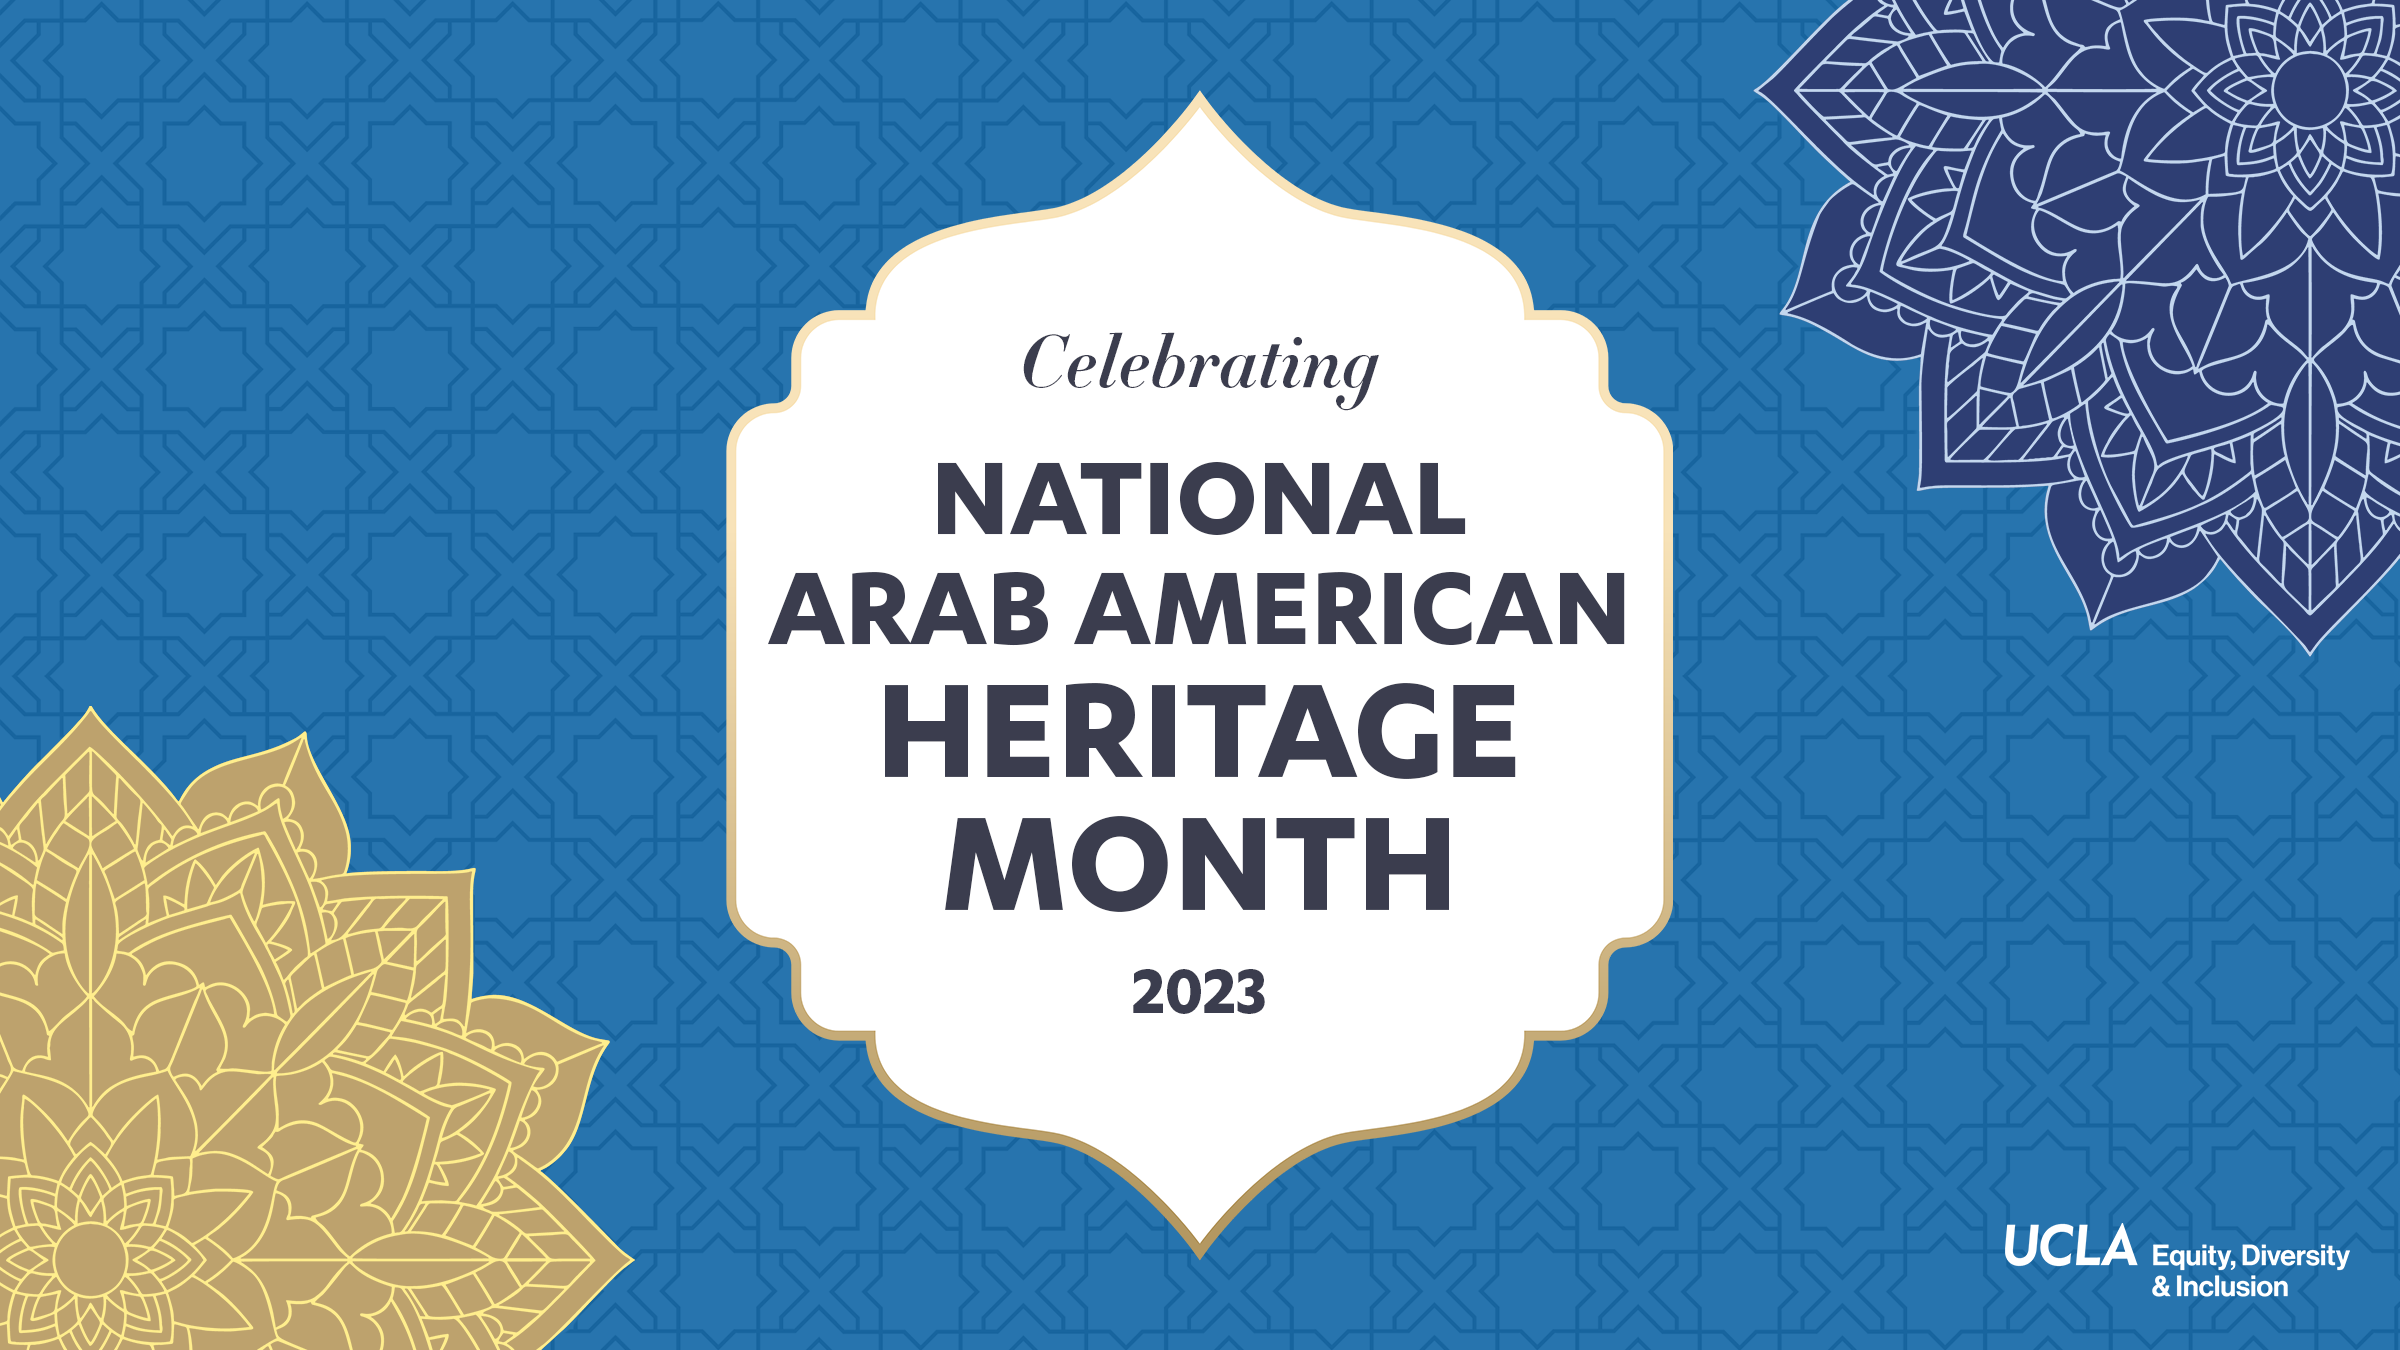 commemorating arab american heritage month (2023)